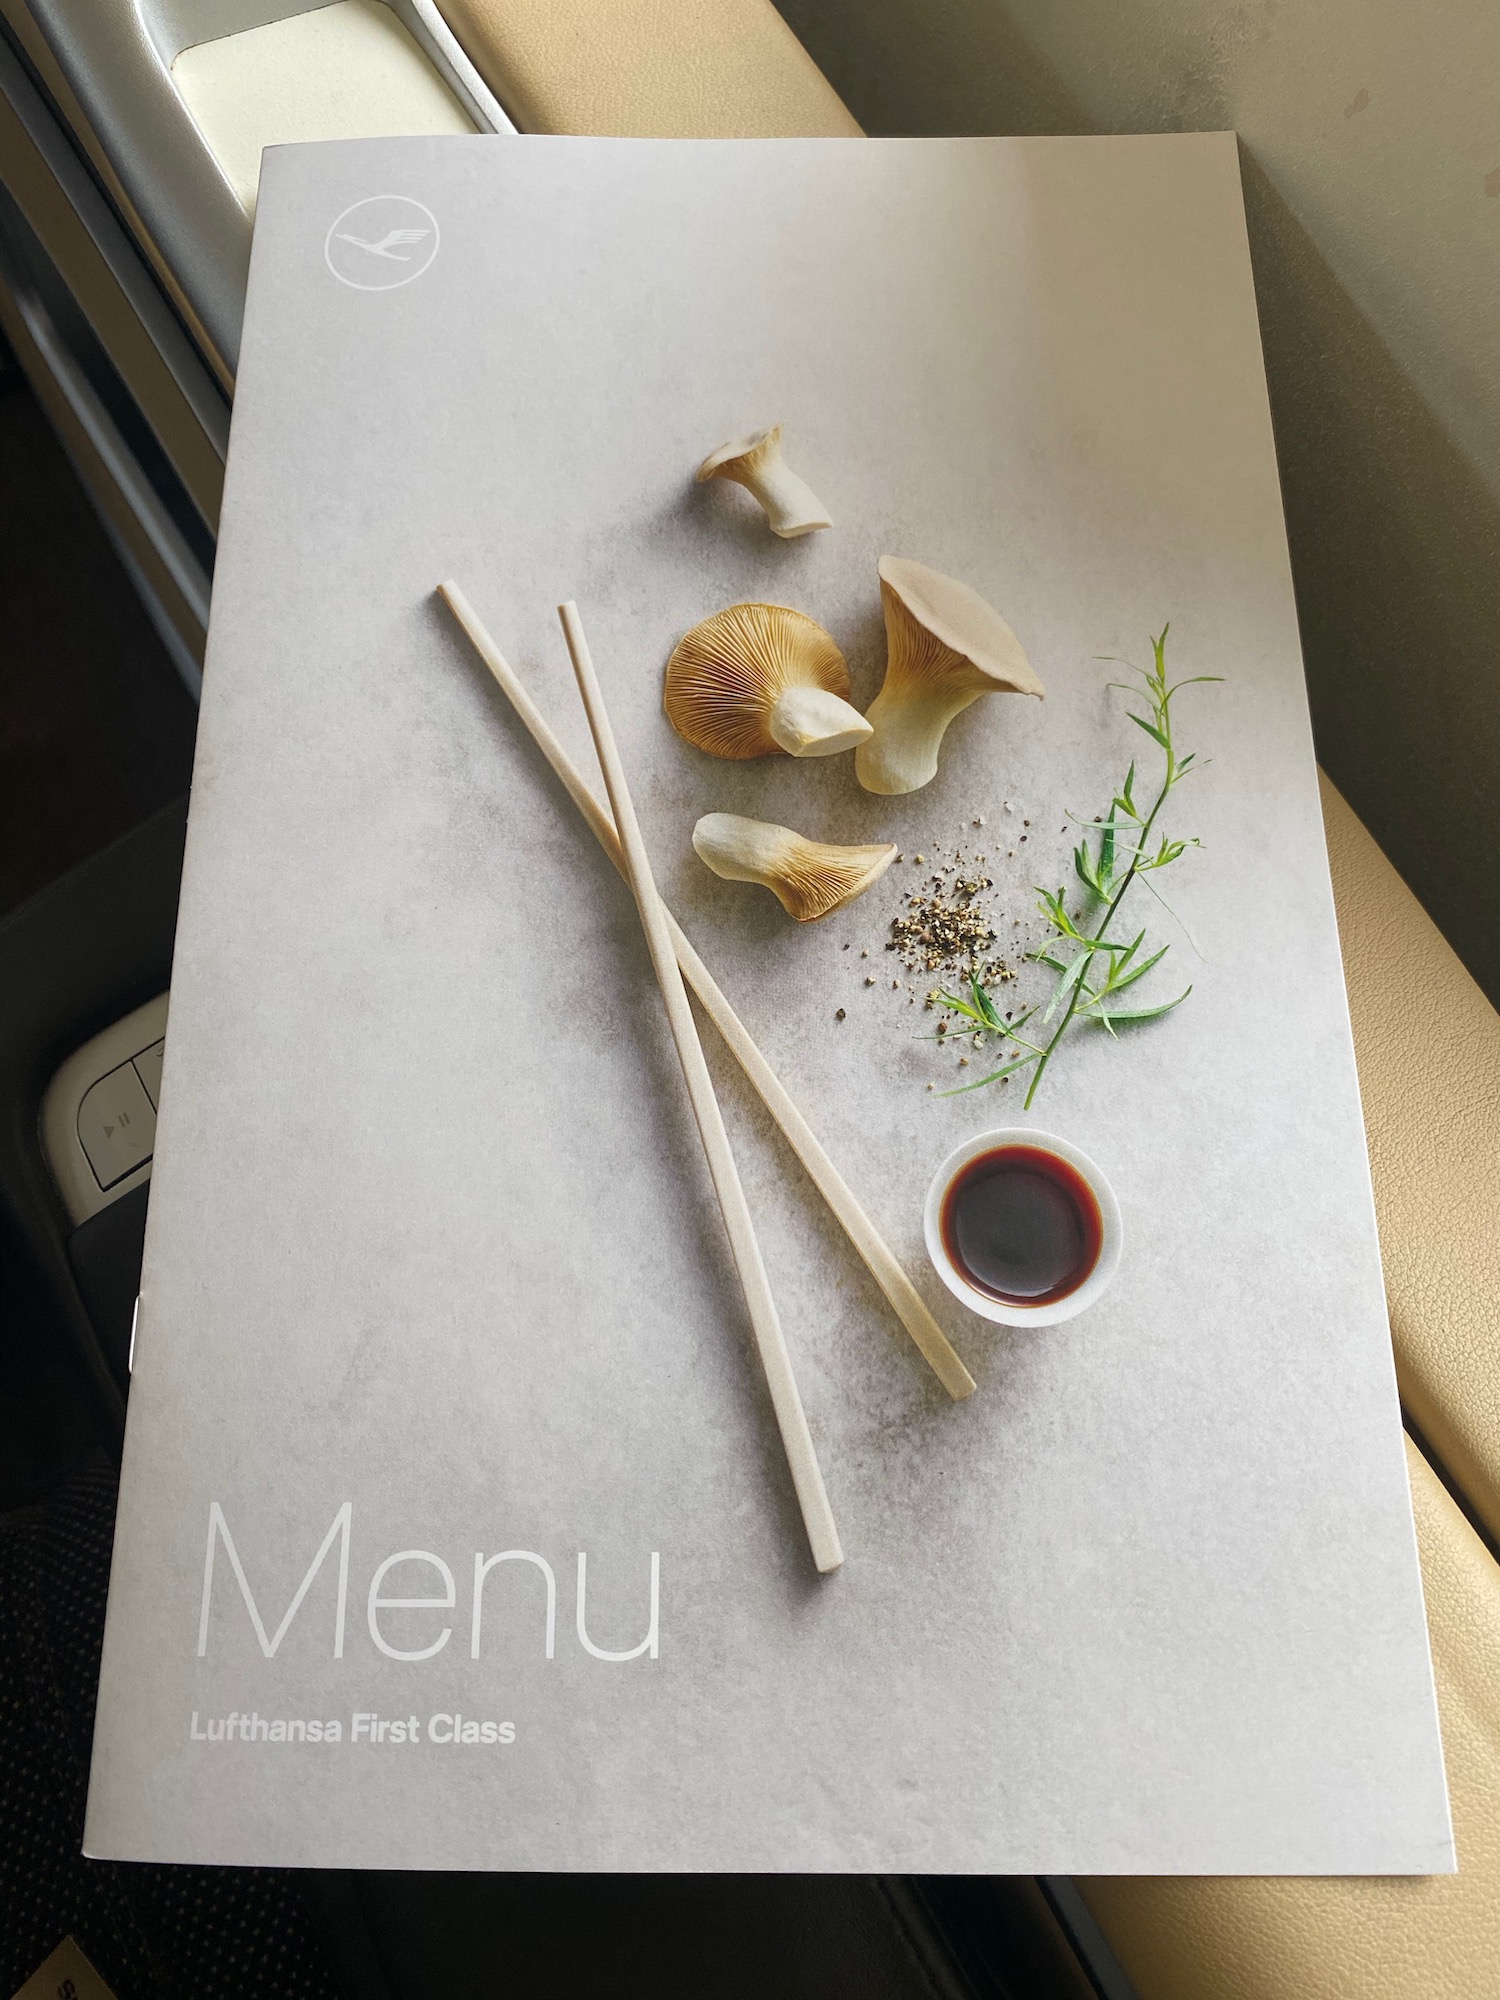 a menu with mushrooms and chopsticks